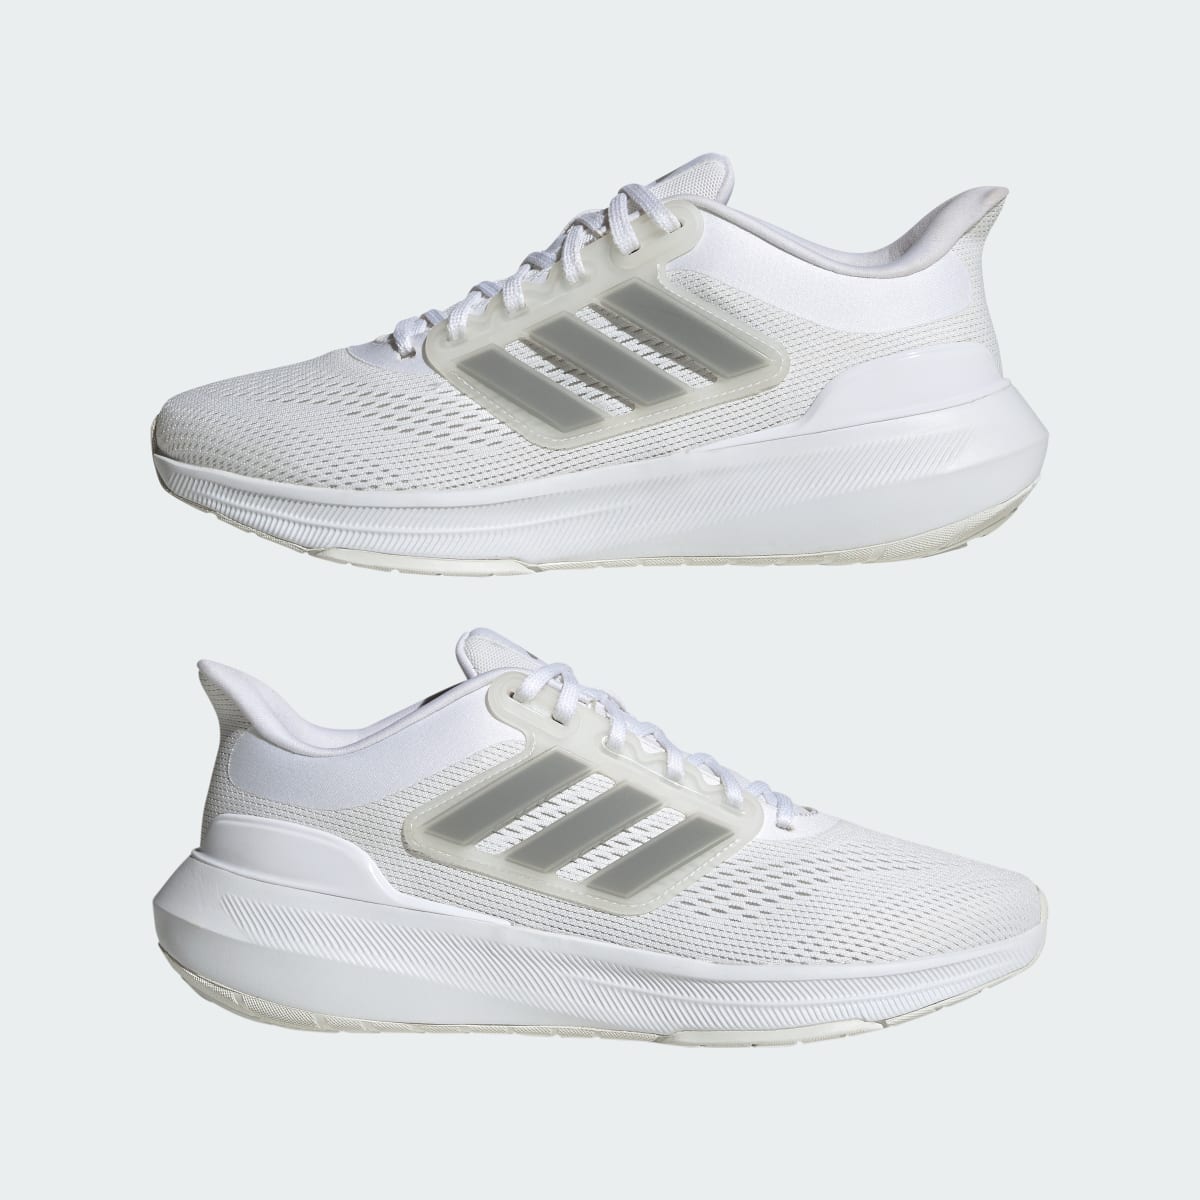 Adidas Ultrabounce Ayakkabı. 8